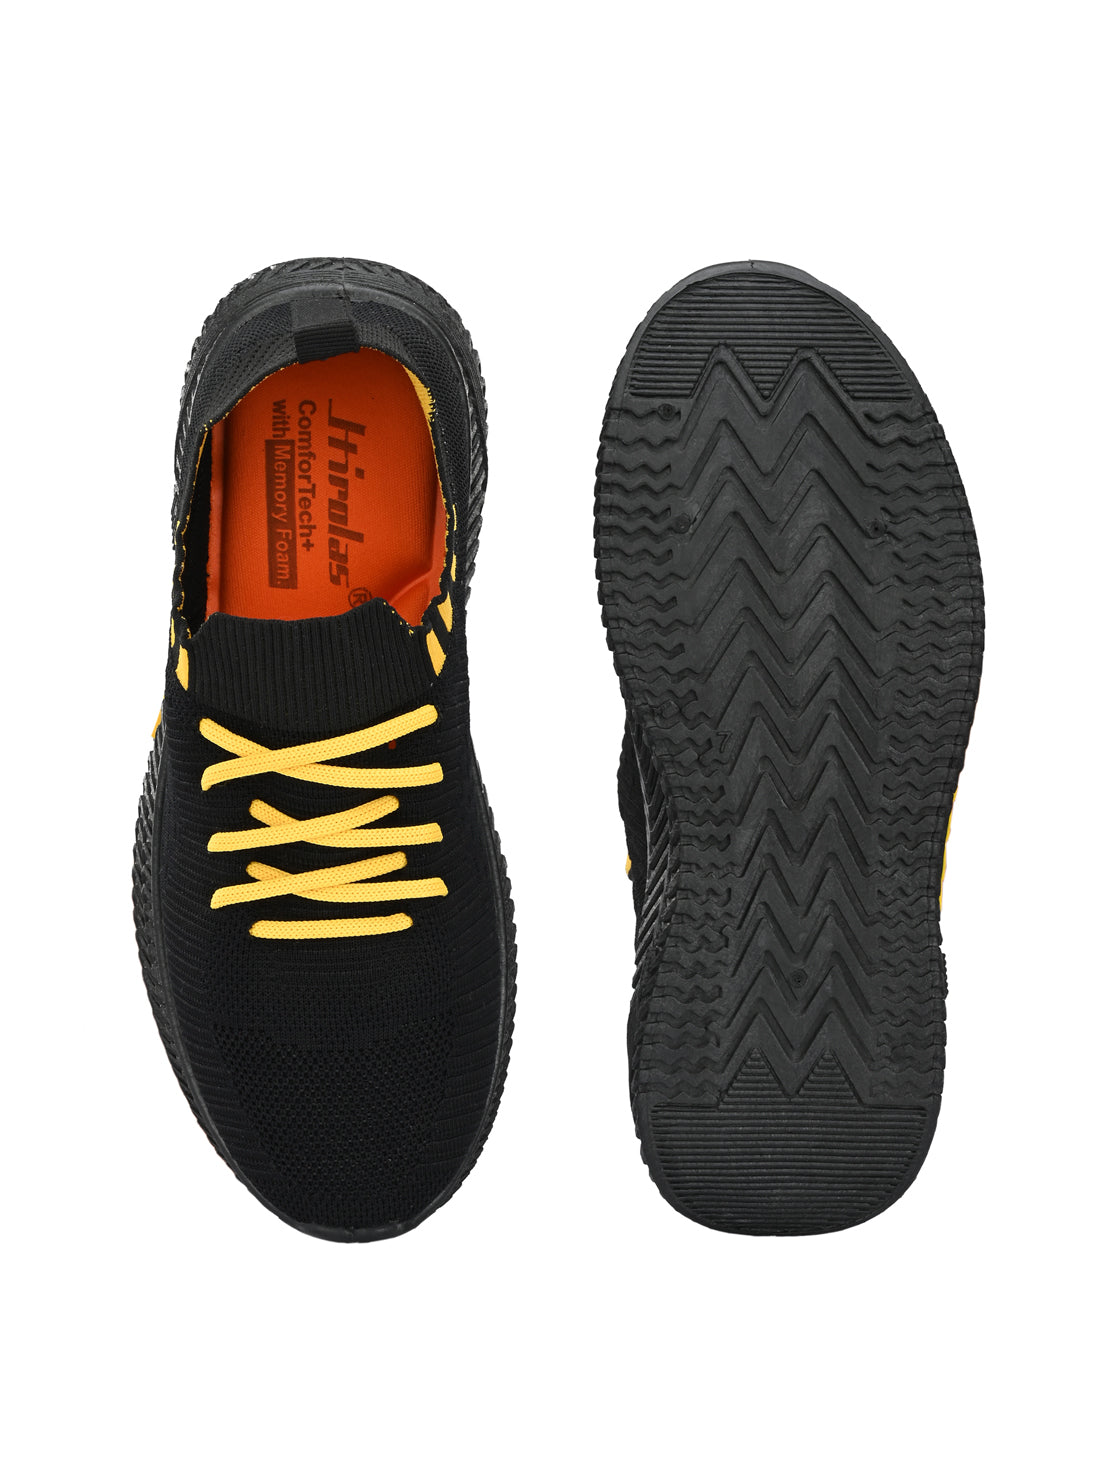 Hirolas® Men's Black Knitted Running/Walking/Gym Lace Up Sneaker Sport Shoes (HRL2046BLK)